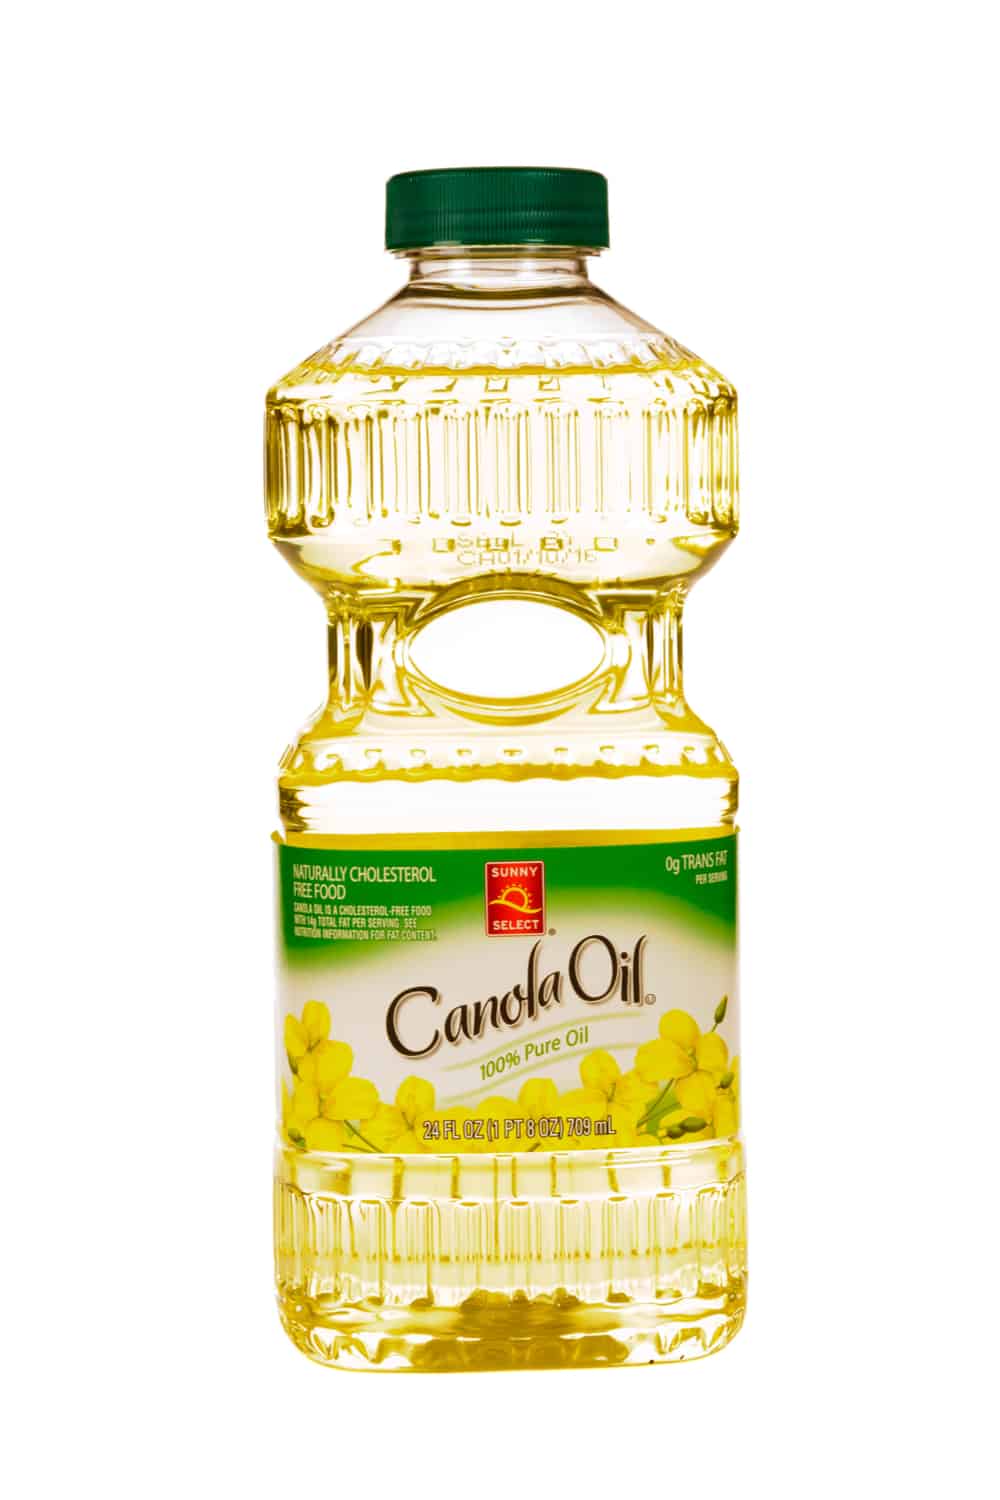 How Long Does Canola Oil Last